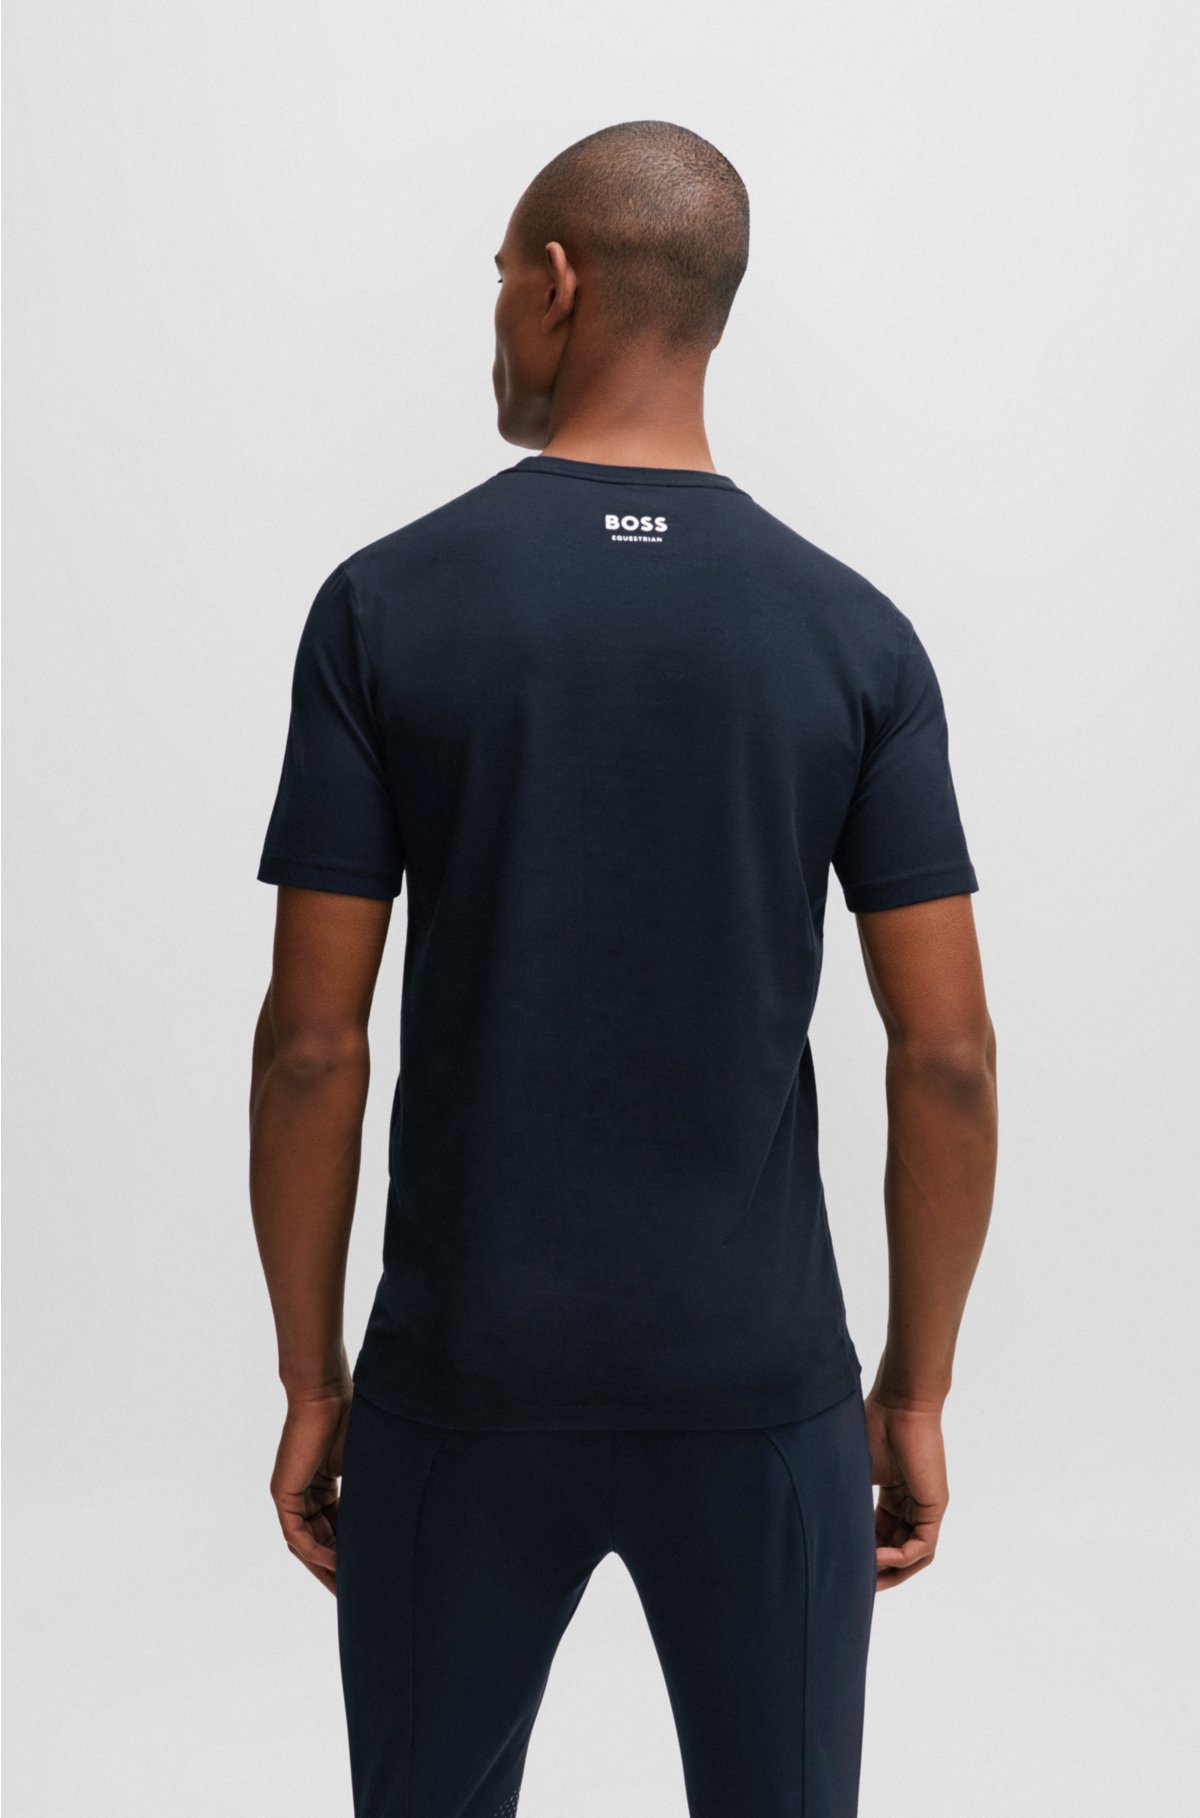 Equestrian short-sleeved stretch-cotton T-shirt with logo, Dark Blue